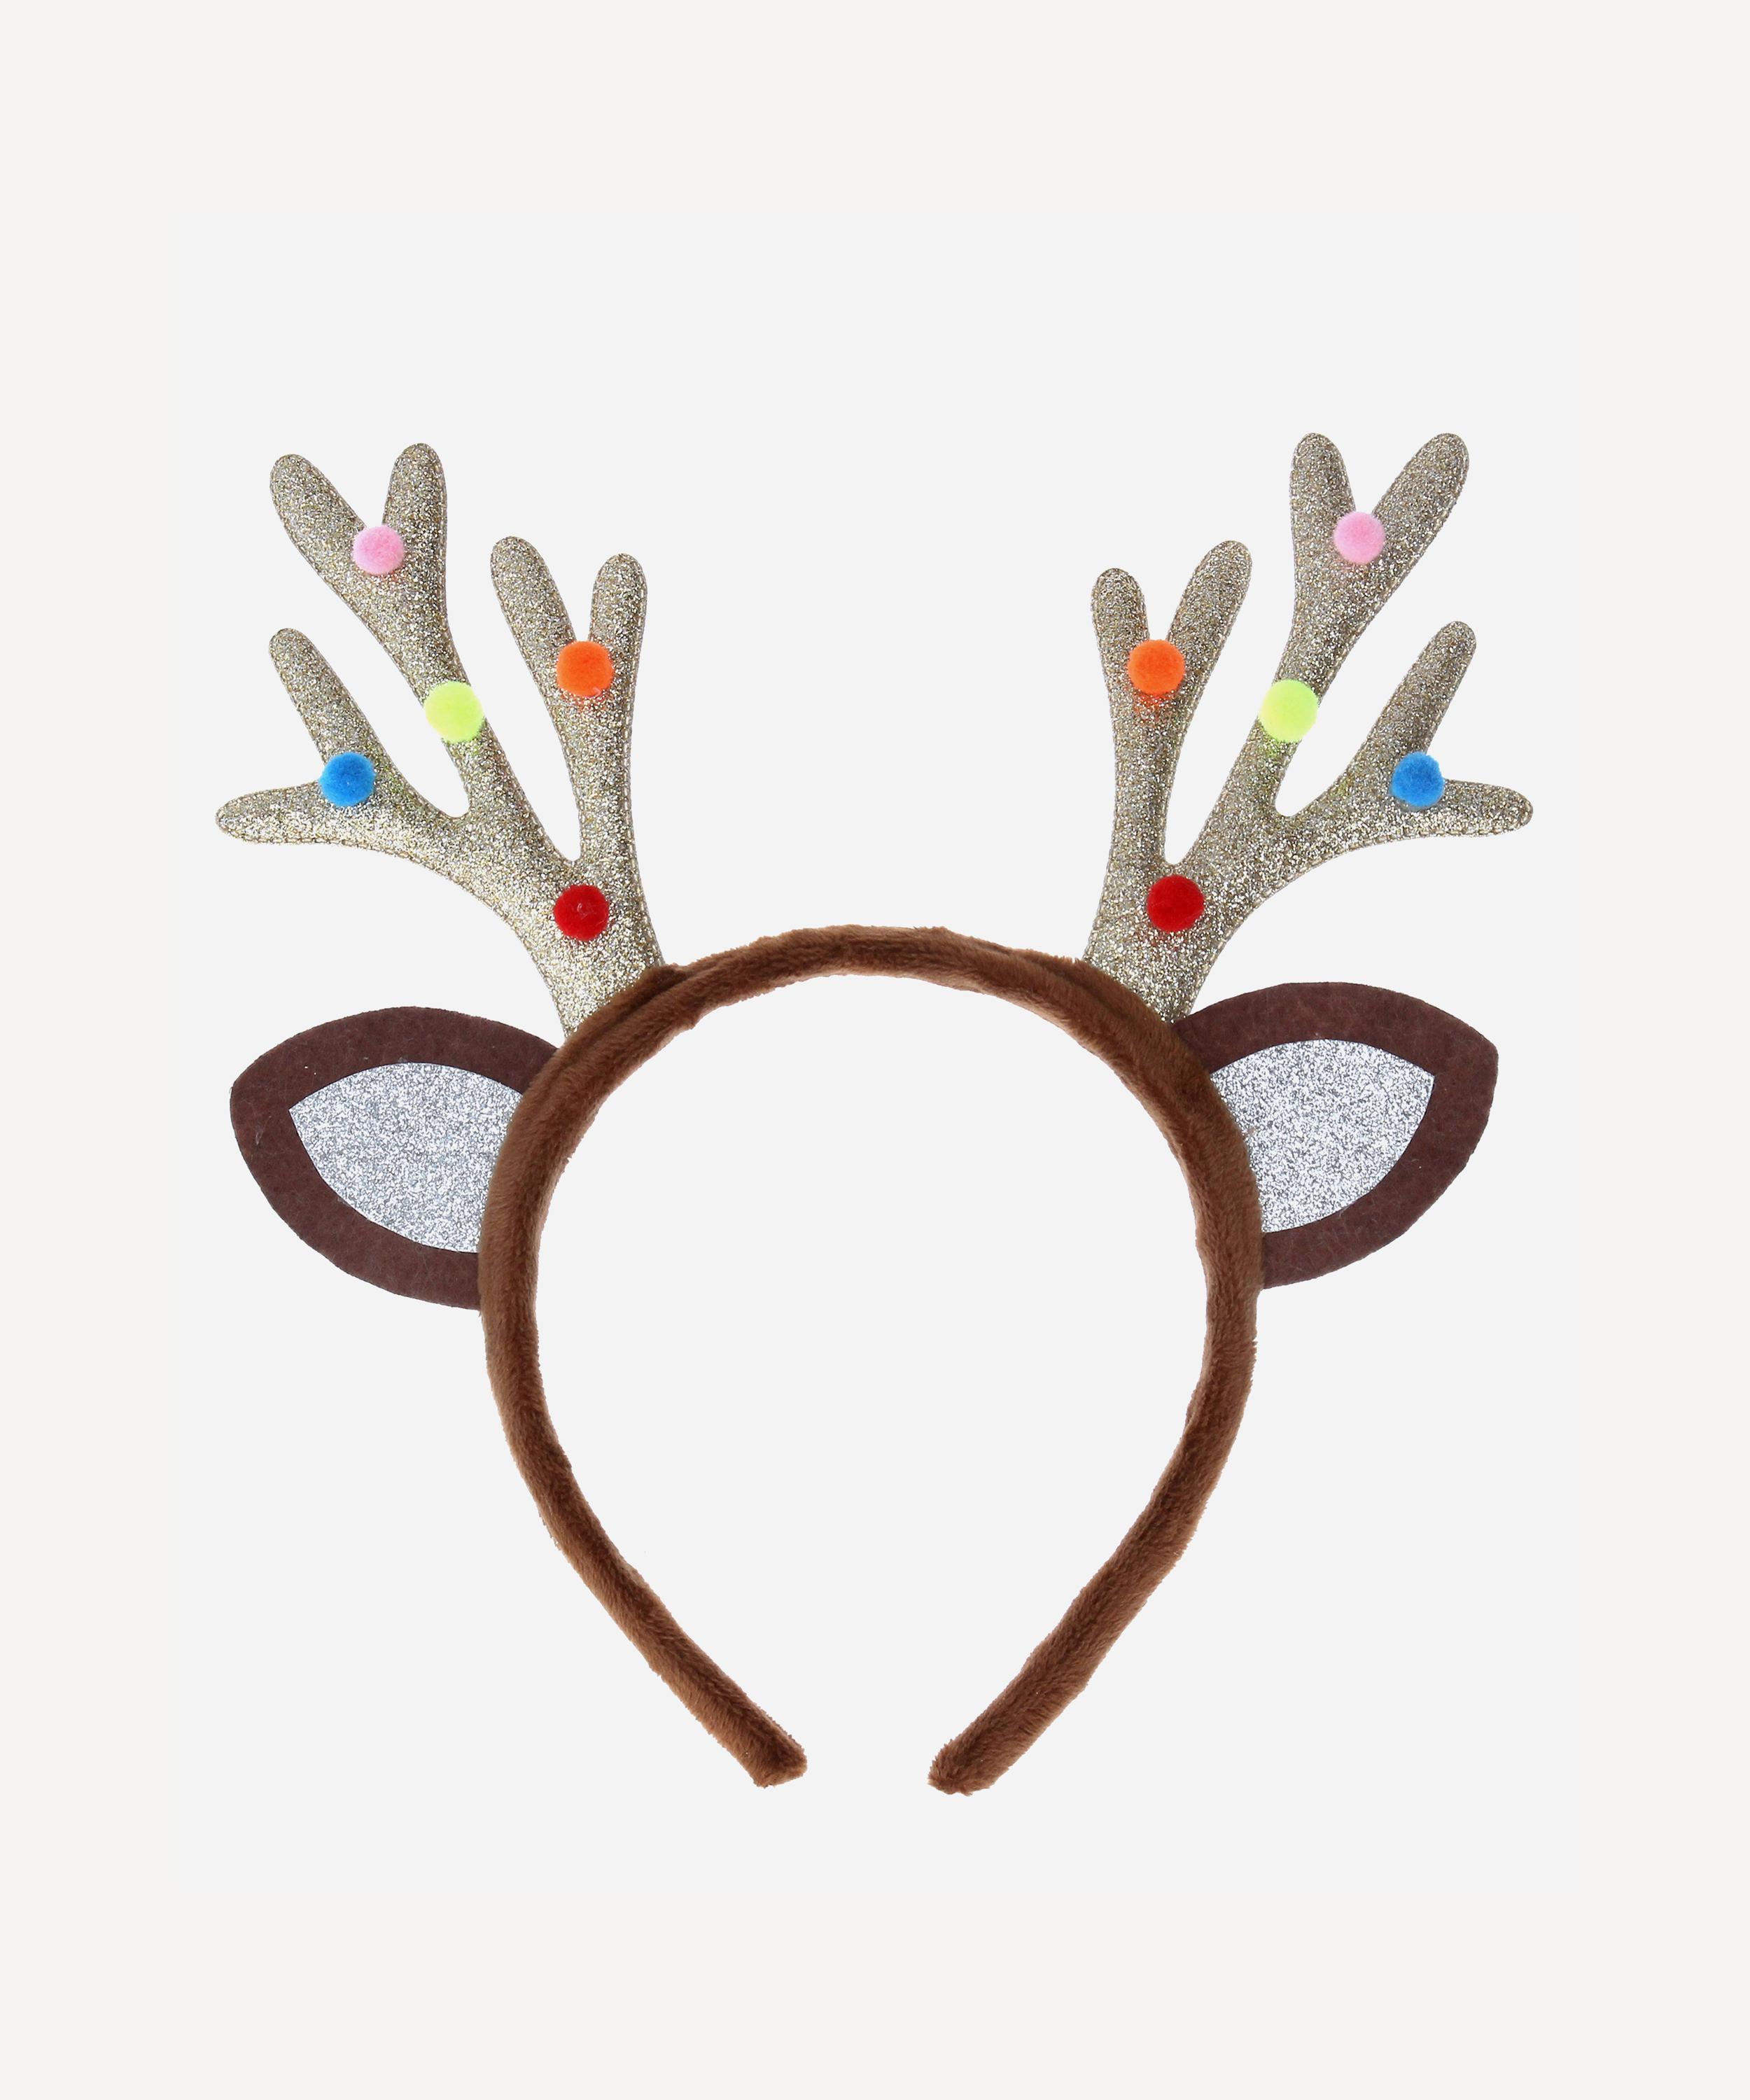 where to buy reindeer headband